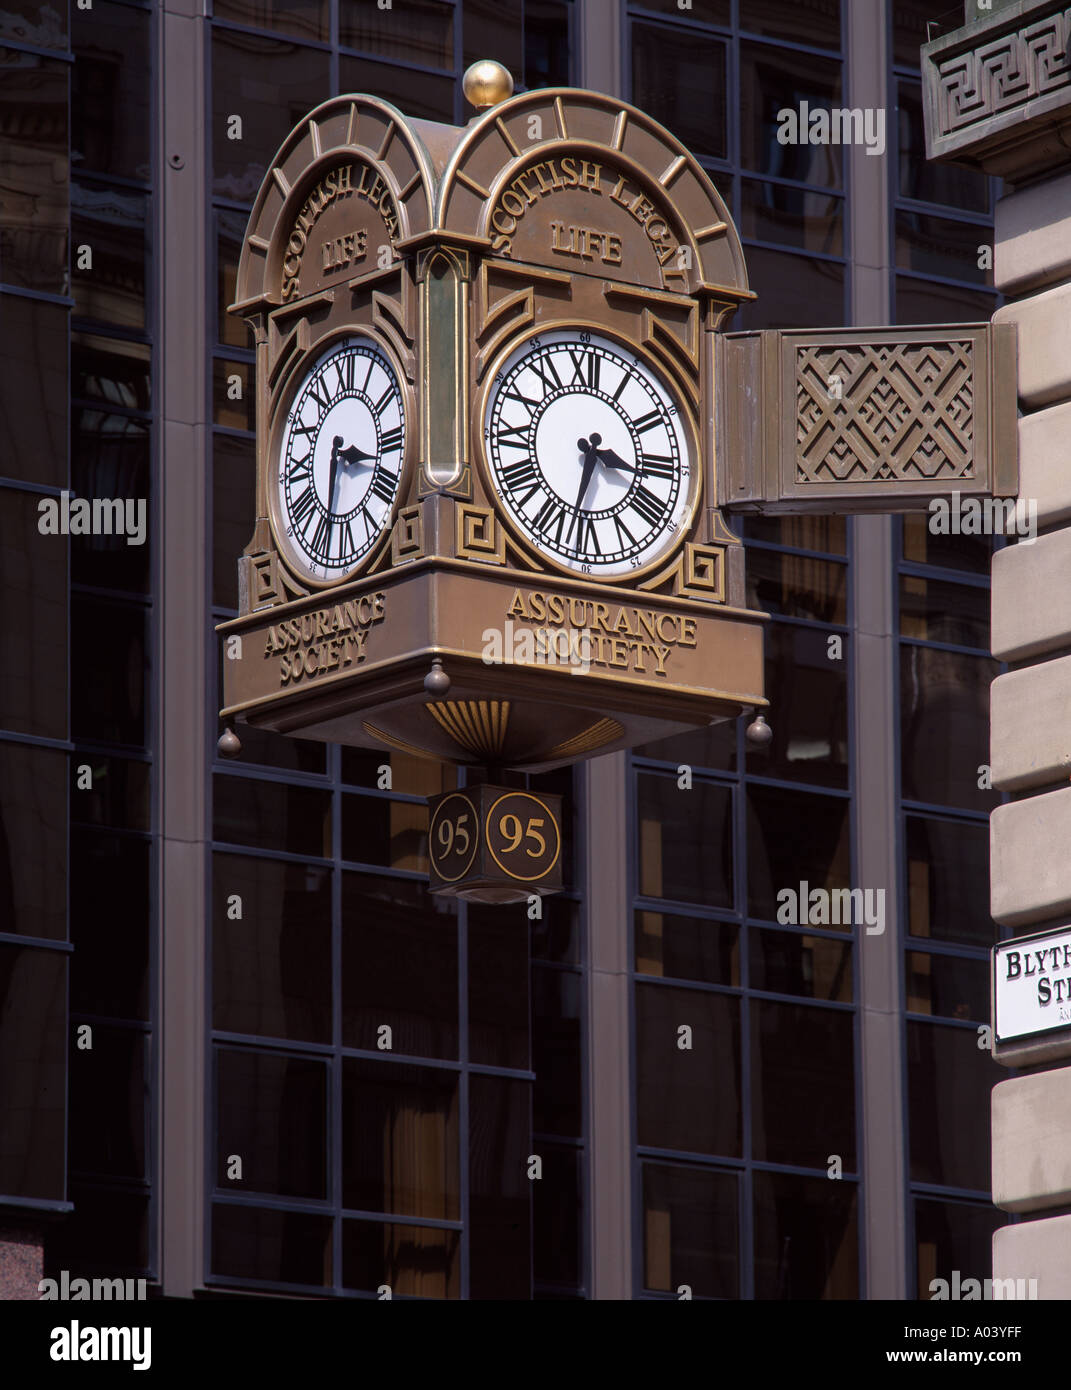 Scottish Legal Life Assurance Society Clock, Glasgow, Scotland, UK Stock Photo